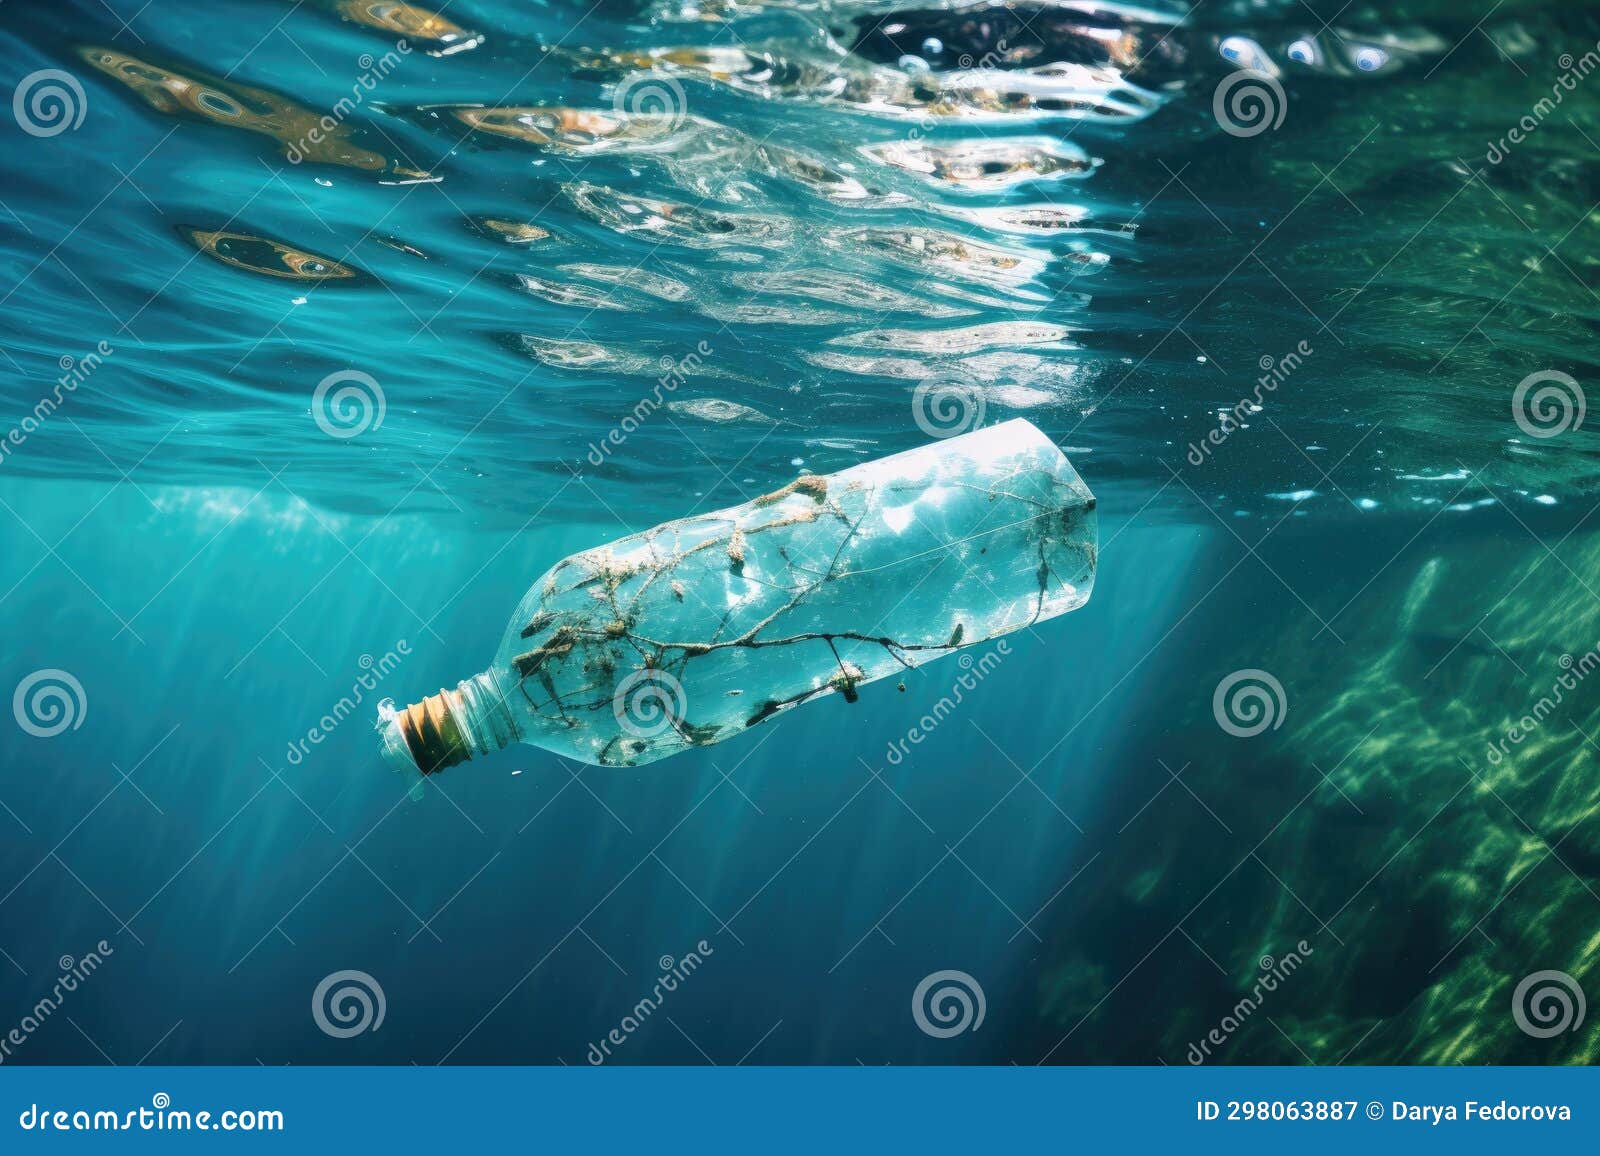 Plastic Bottle in the Ocean. World Plastic Pollution Stock Image ...